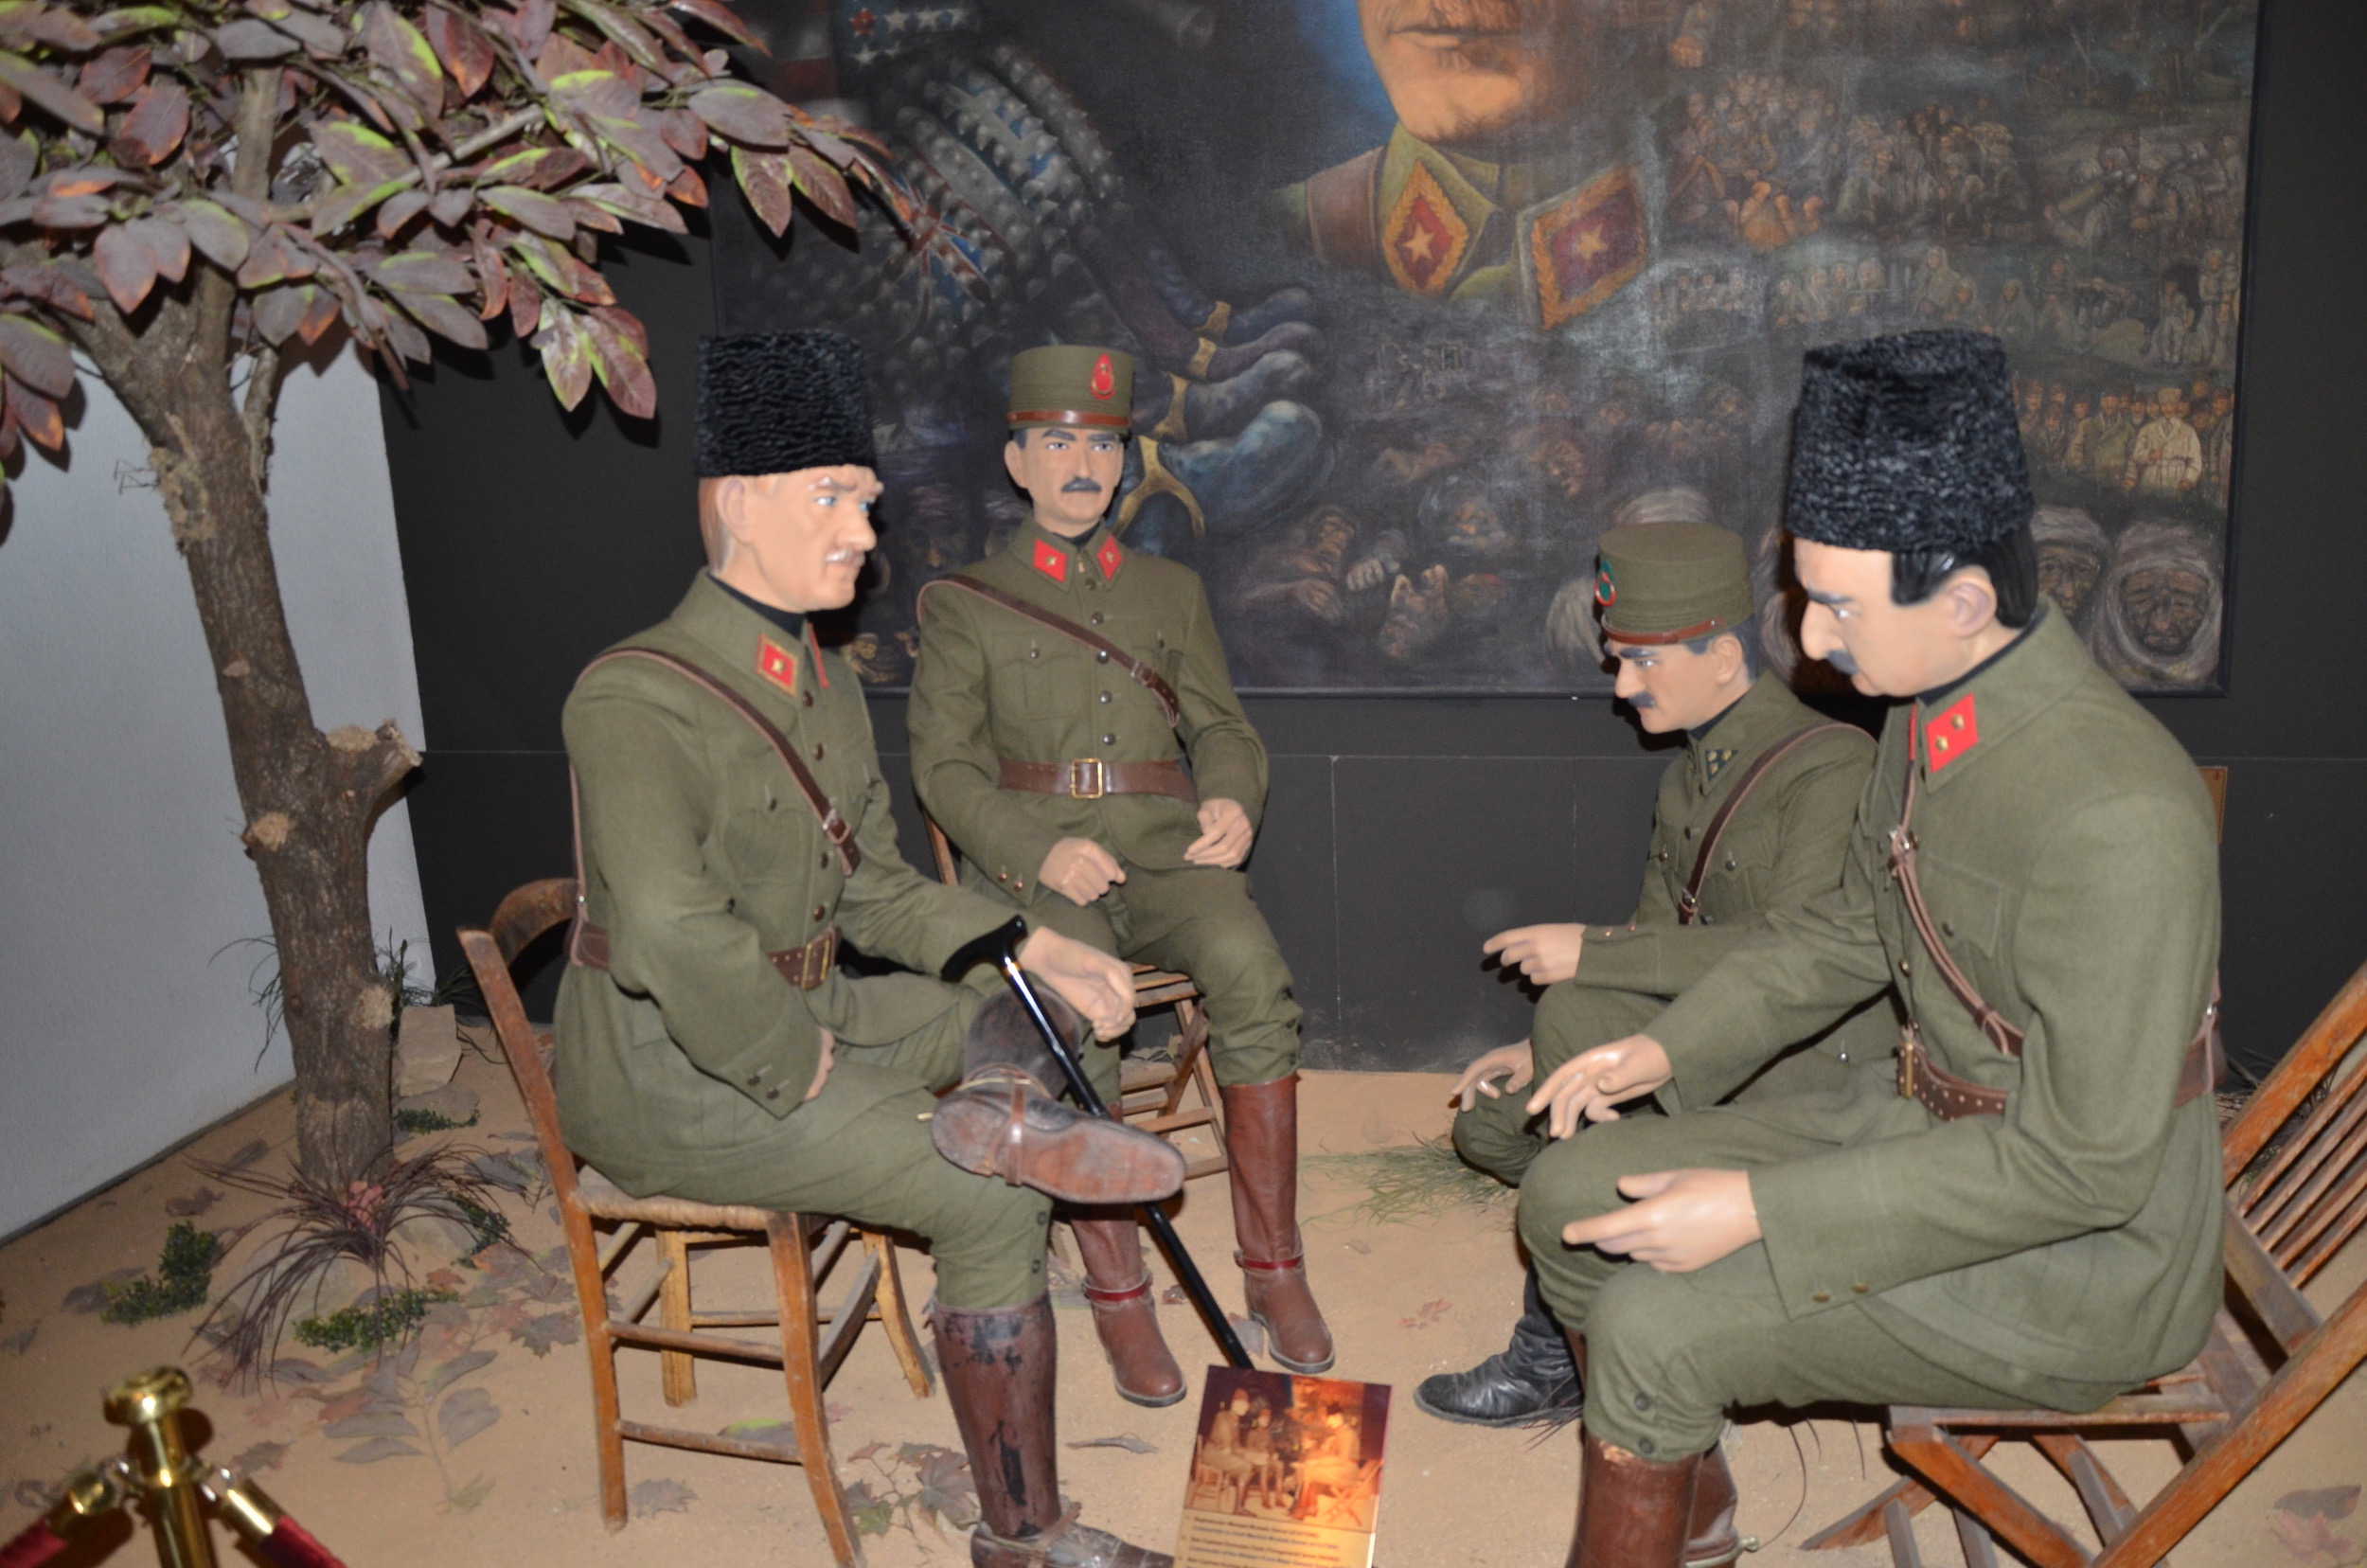 Atatürk meeting with his men